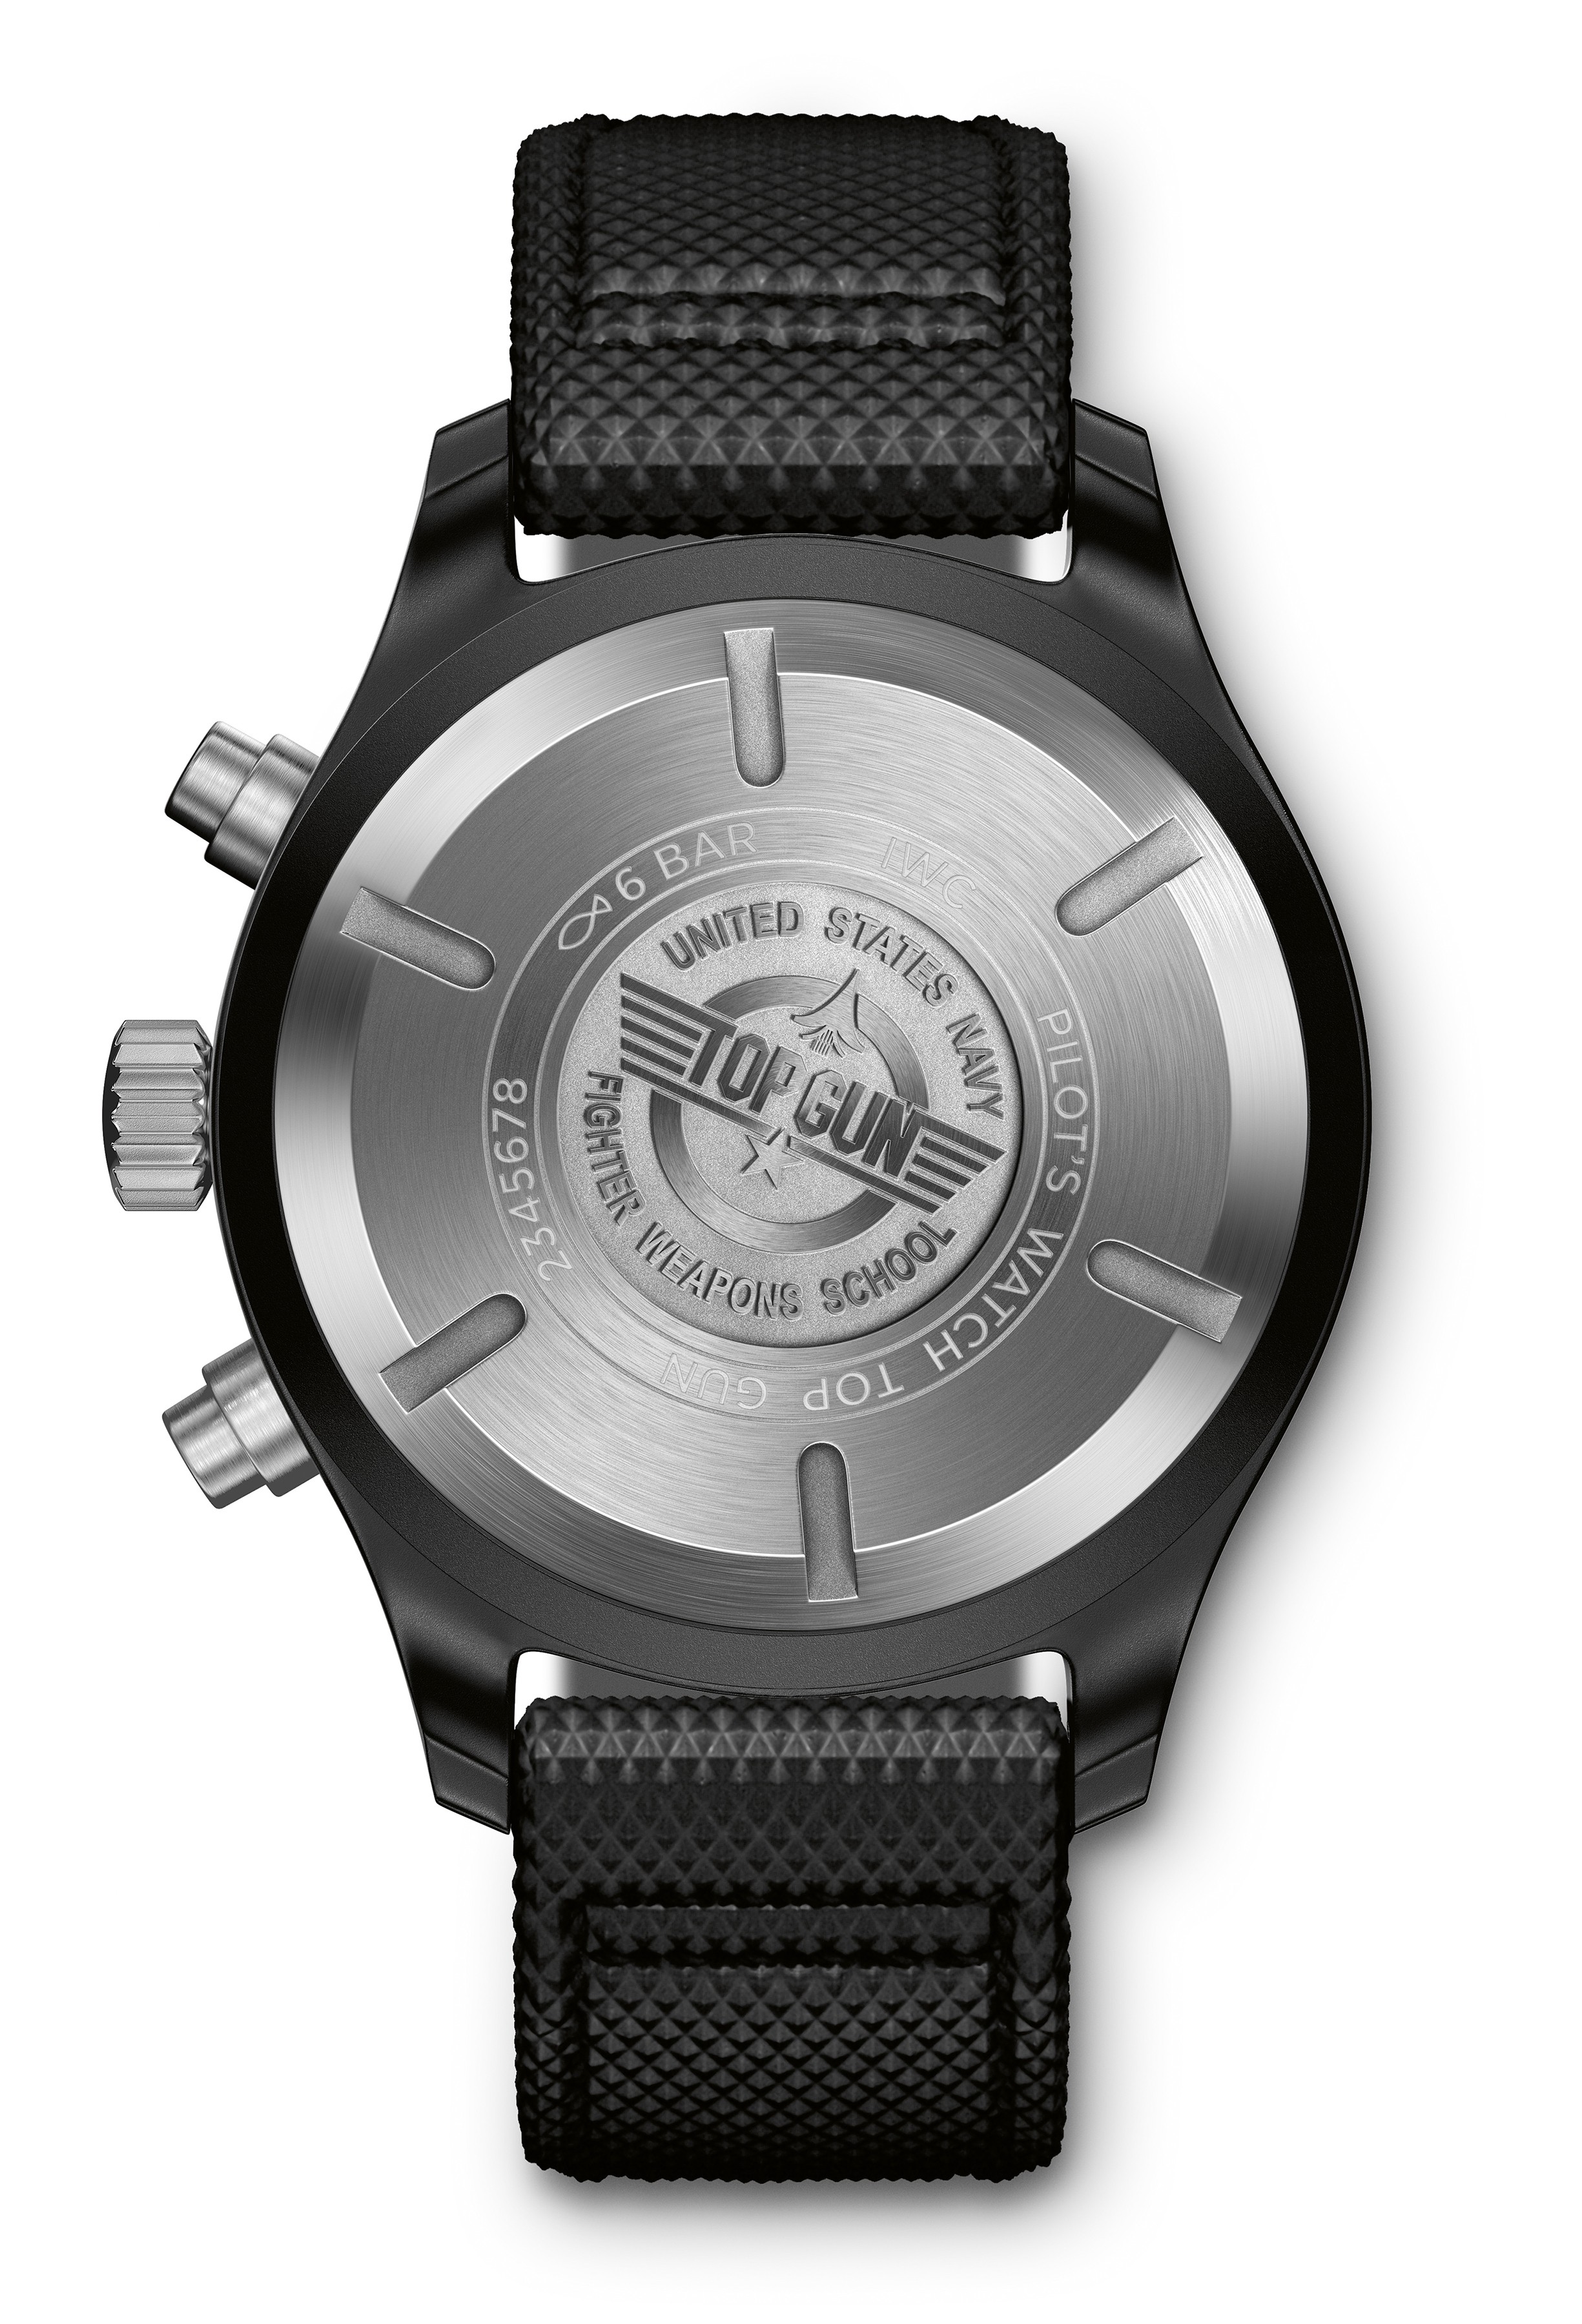 Cheap Fashionable IWC Top Gun Naval Air Force Pilots Chronograph Replica Watches For Men (3)